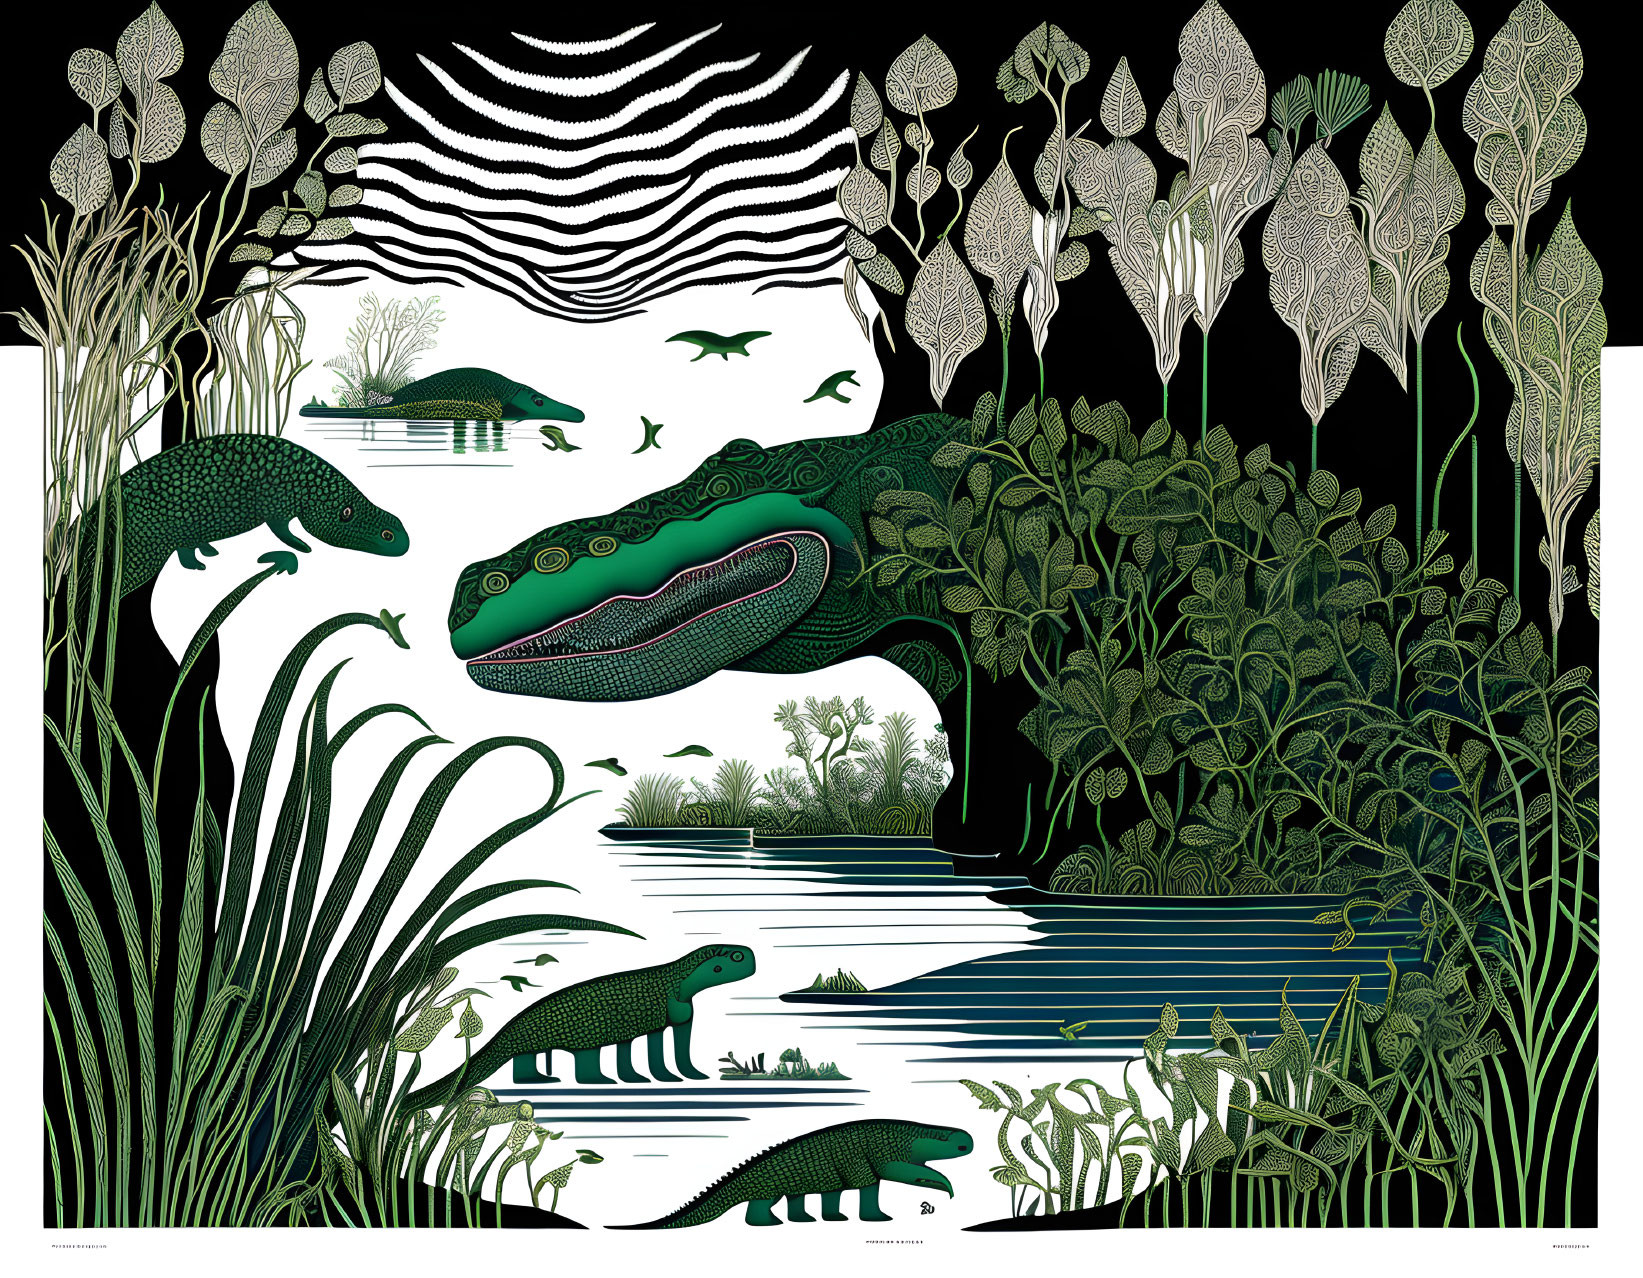 Monochrome swamp illustration with crocodiles, flora, and birds